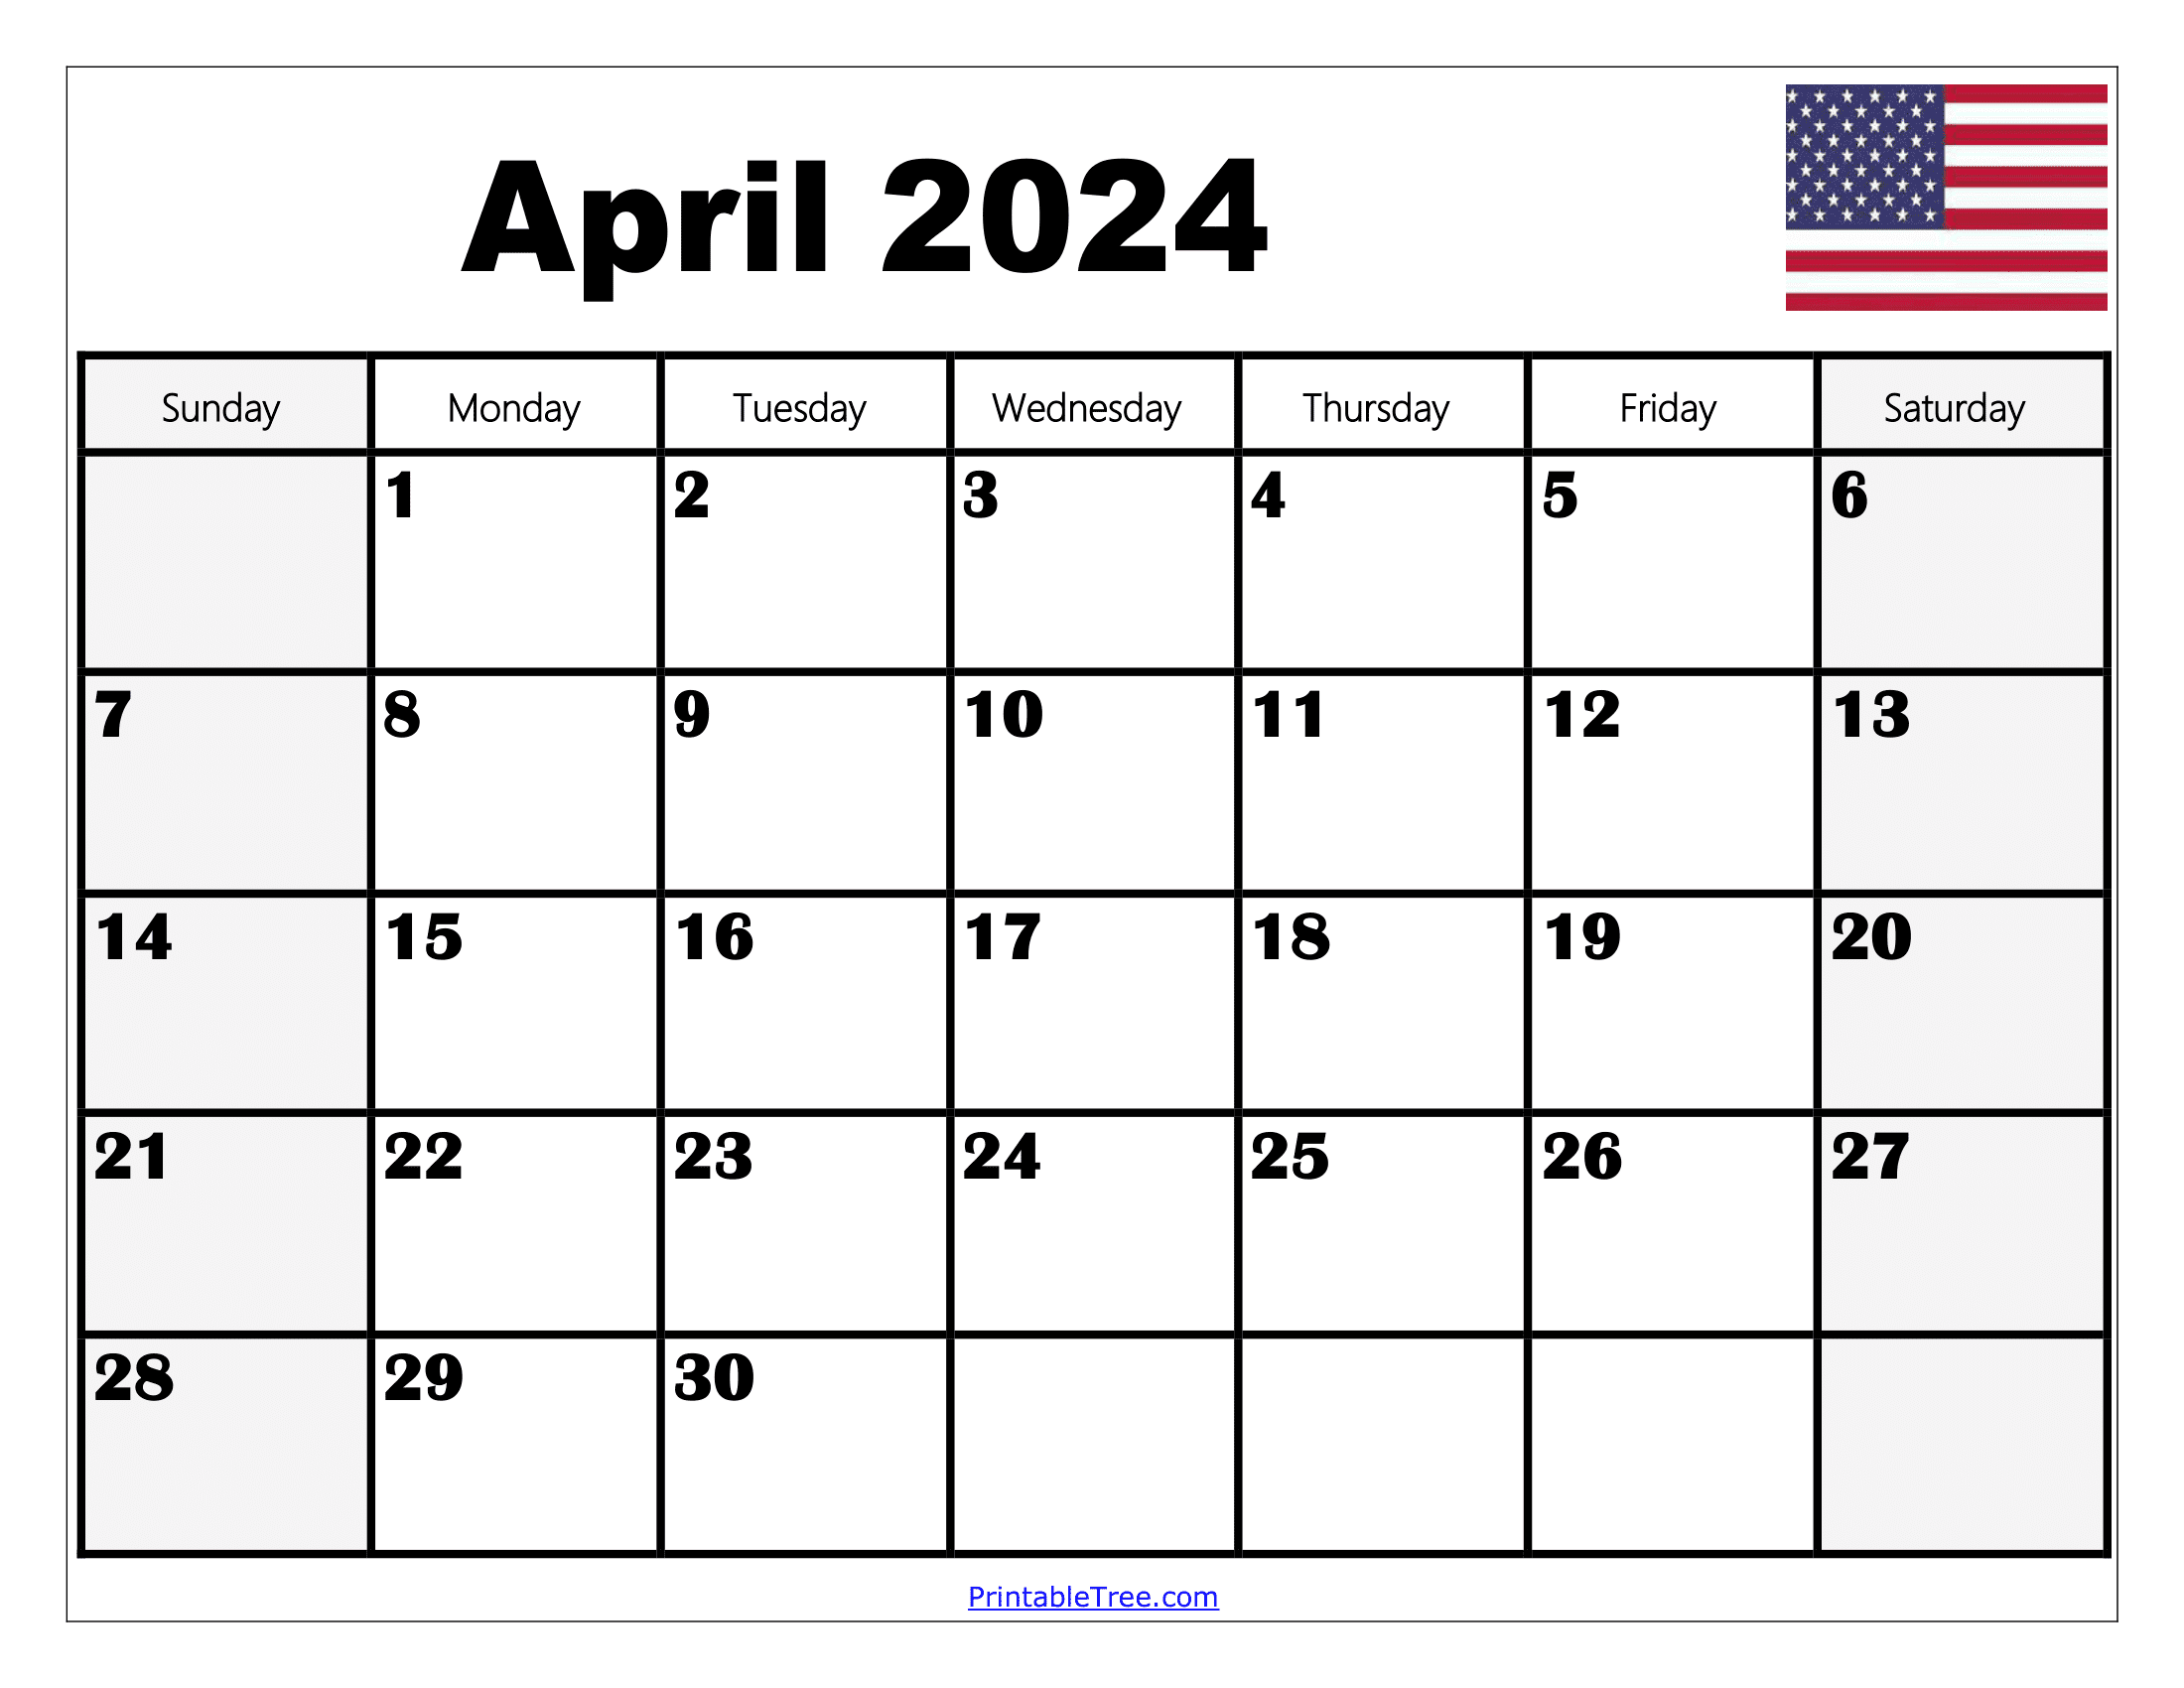 Calendar Template March And April 2024 Berta Celinka - Free Printable 2024 April Calendar With Holidays